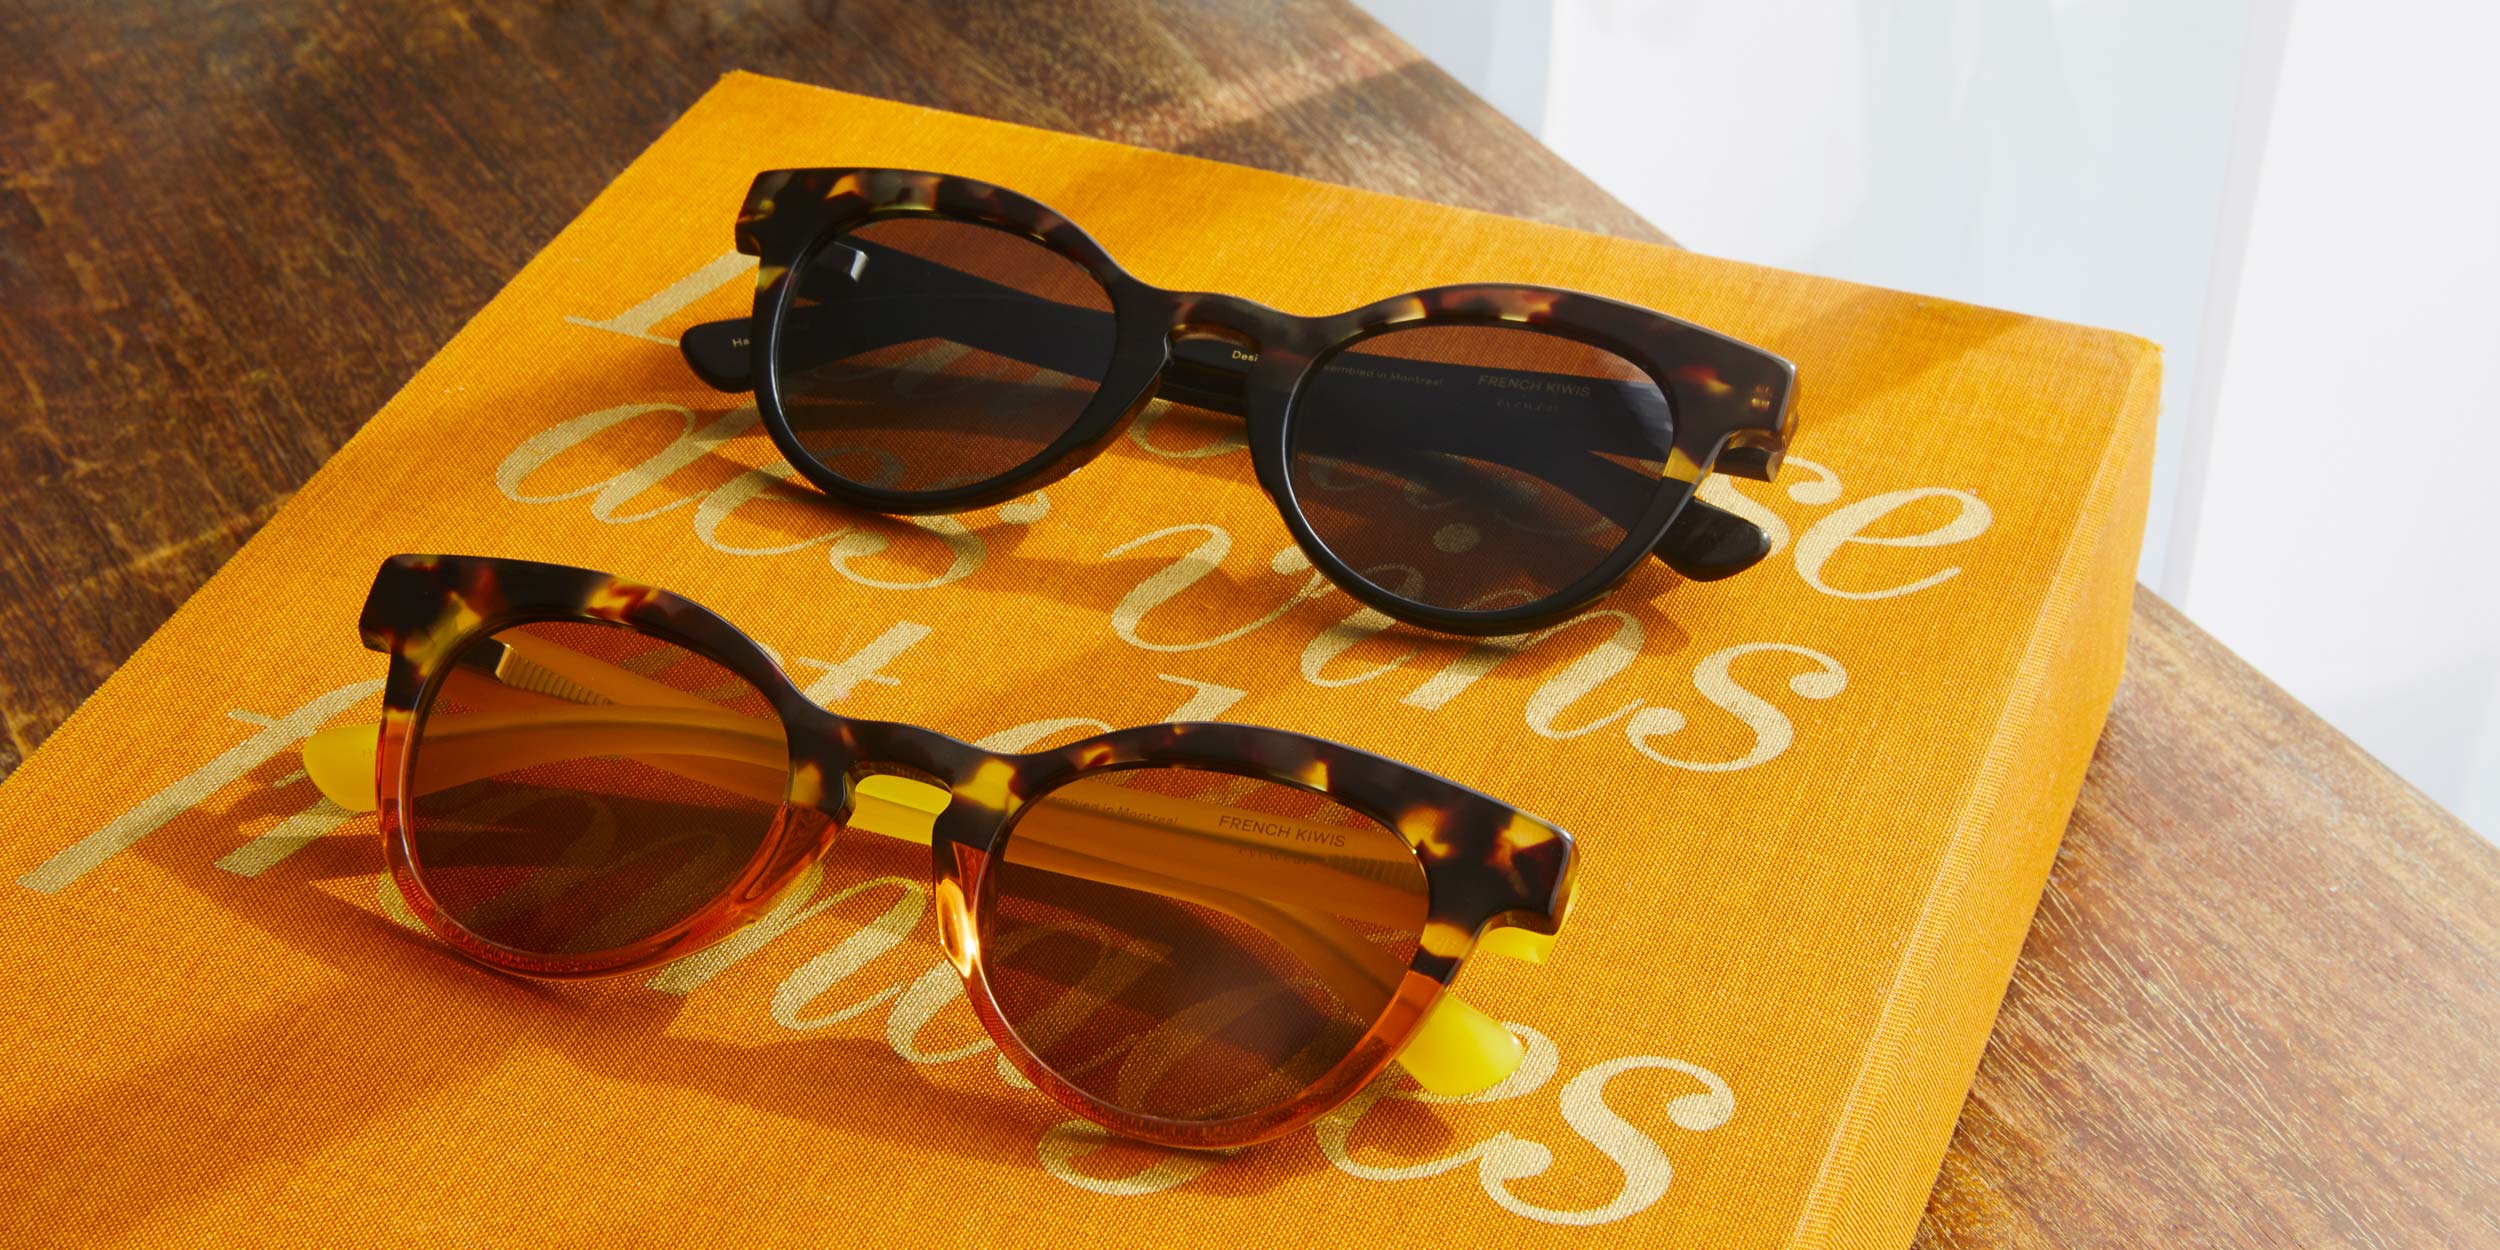 Photo Details of Céline Sun Black & Tortoise Sun Glasses in a room